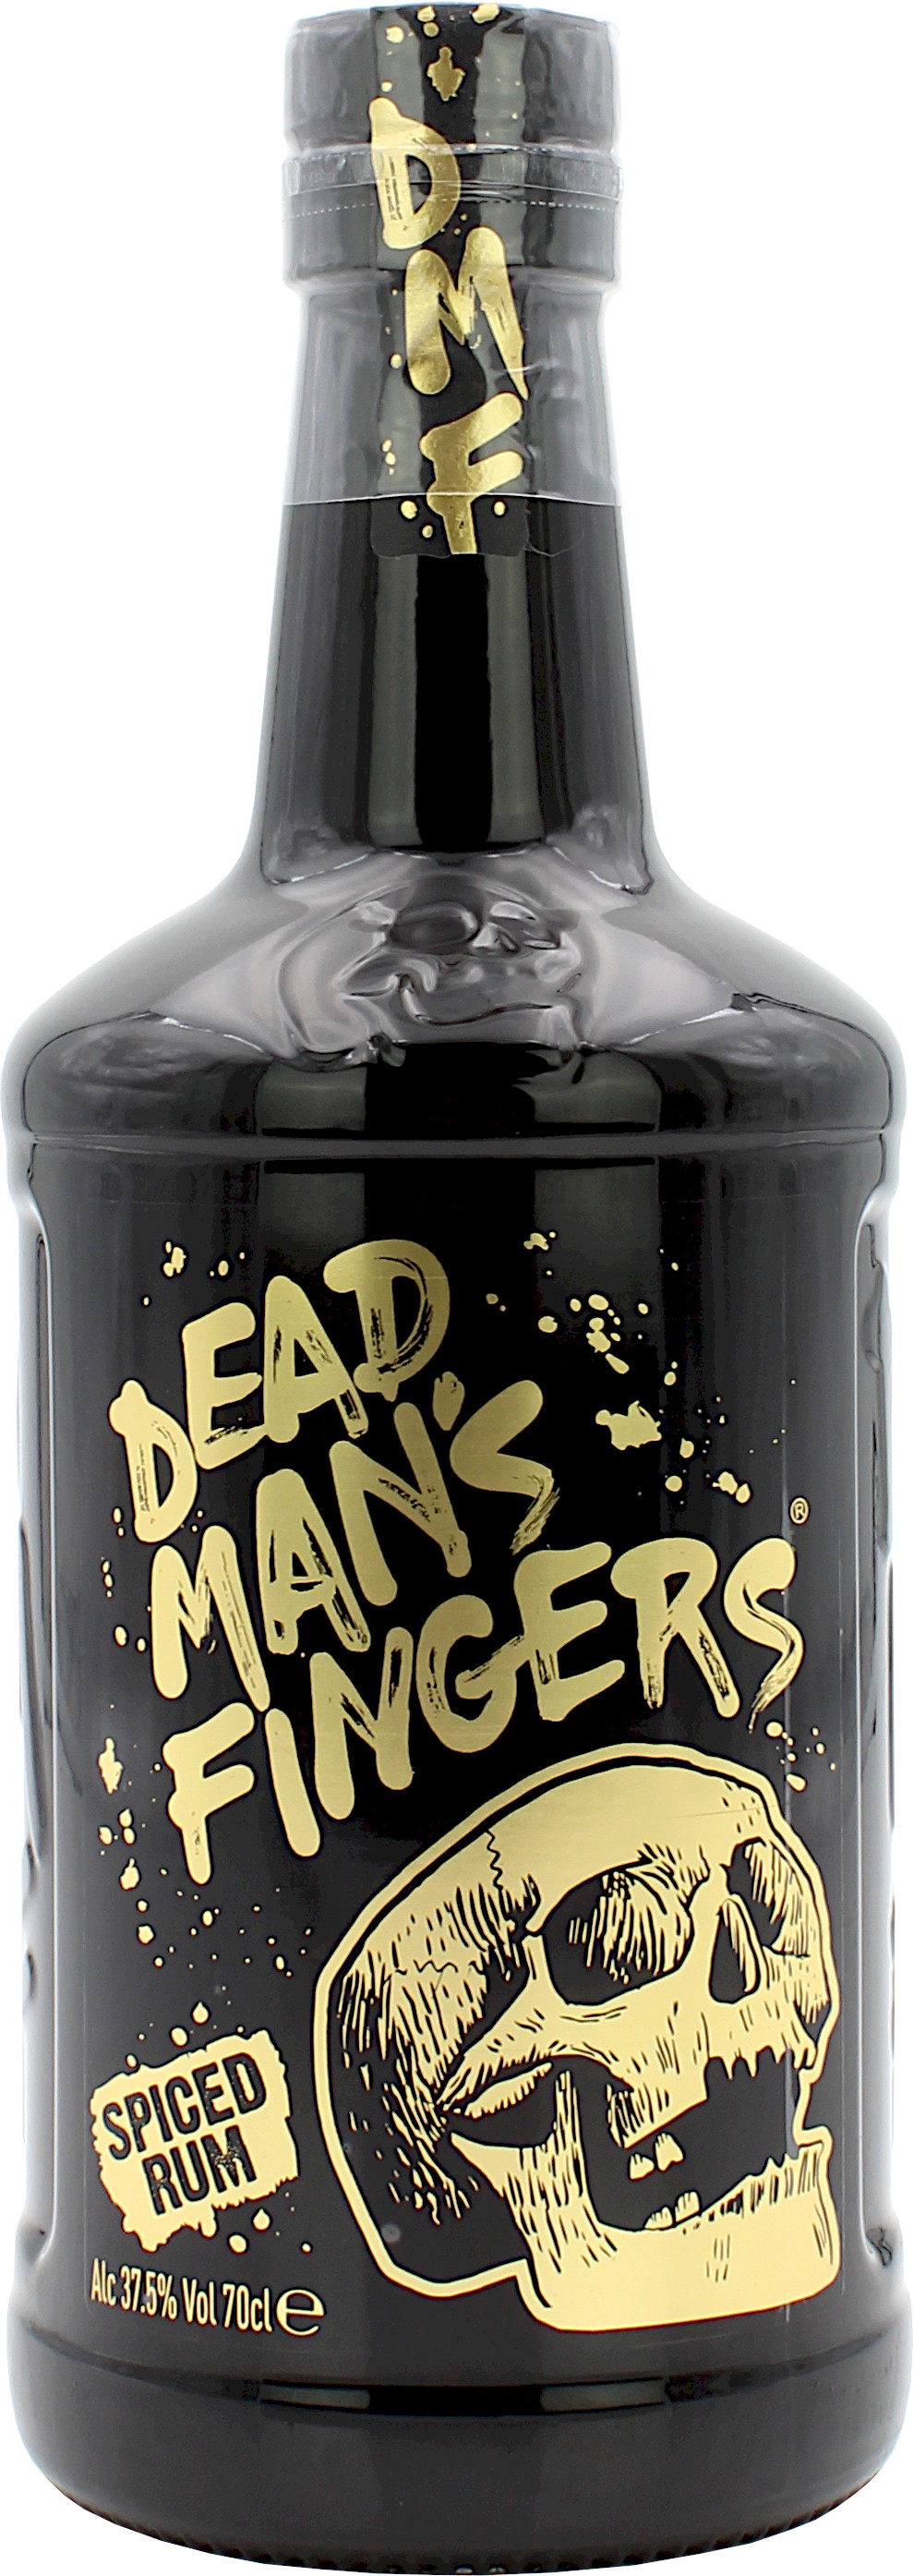 Dead Man's Fingers Spiced Rum 37.5% 0,7l